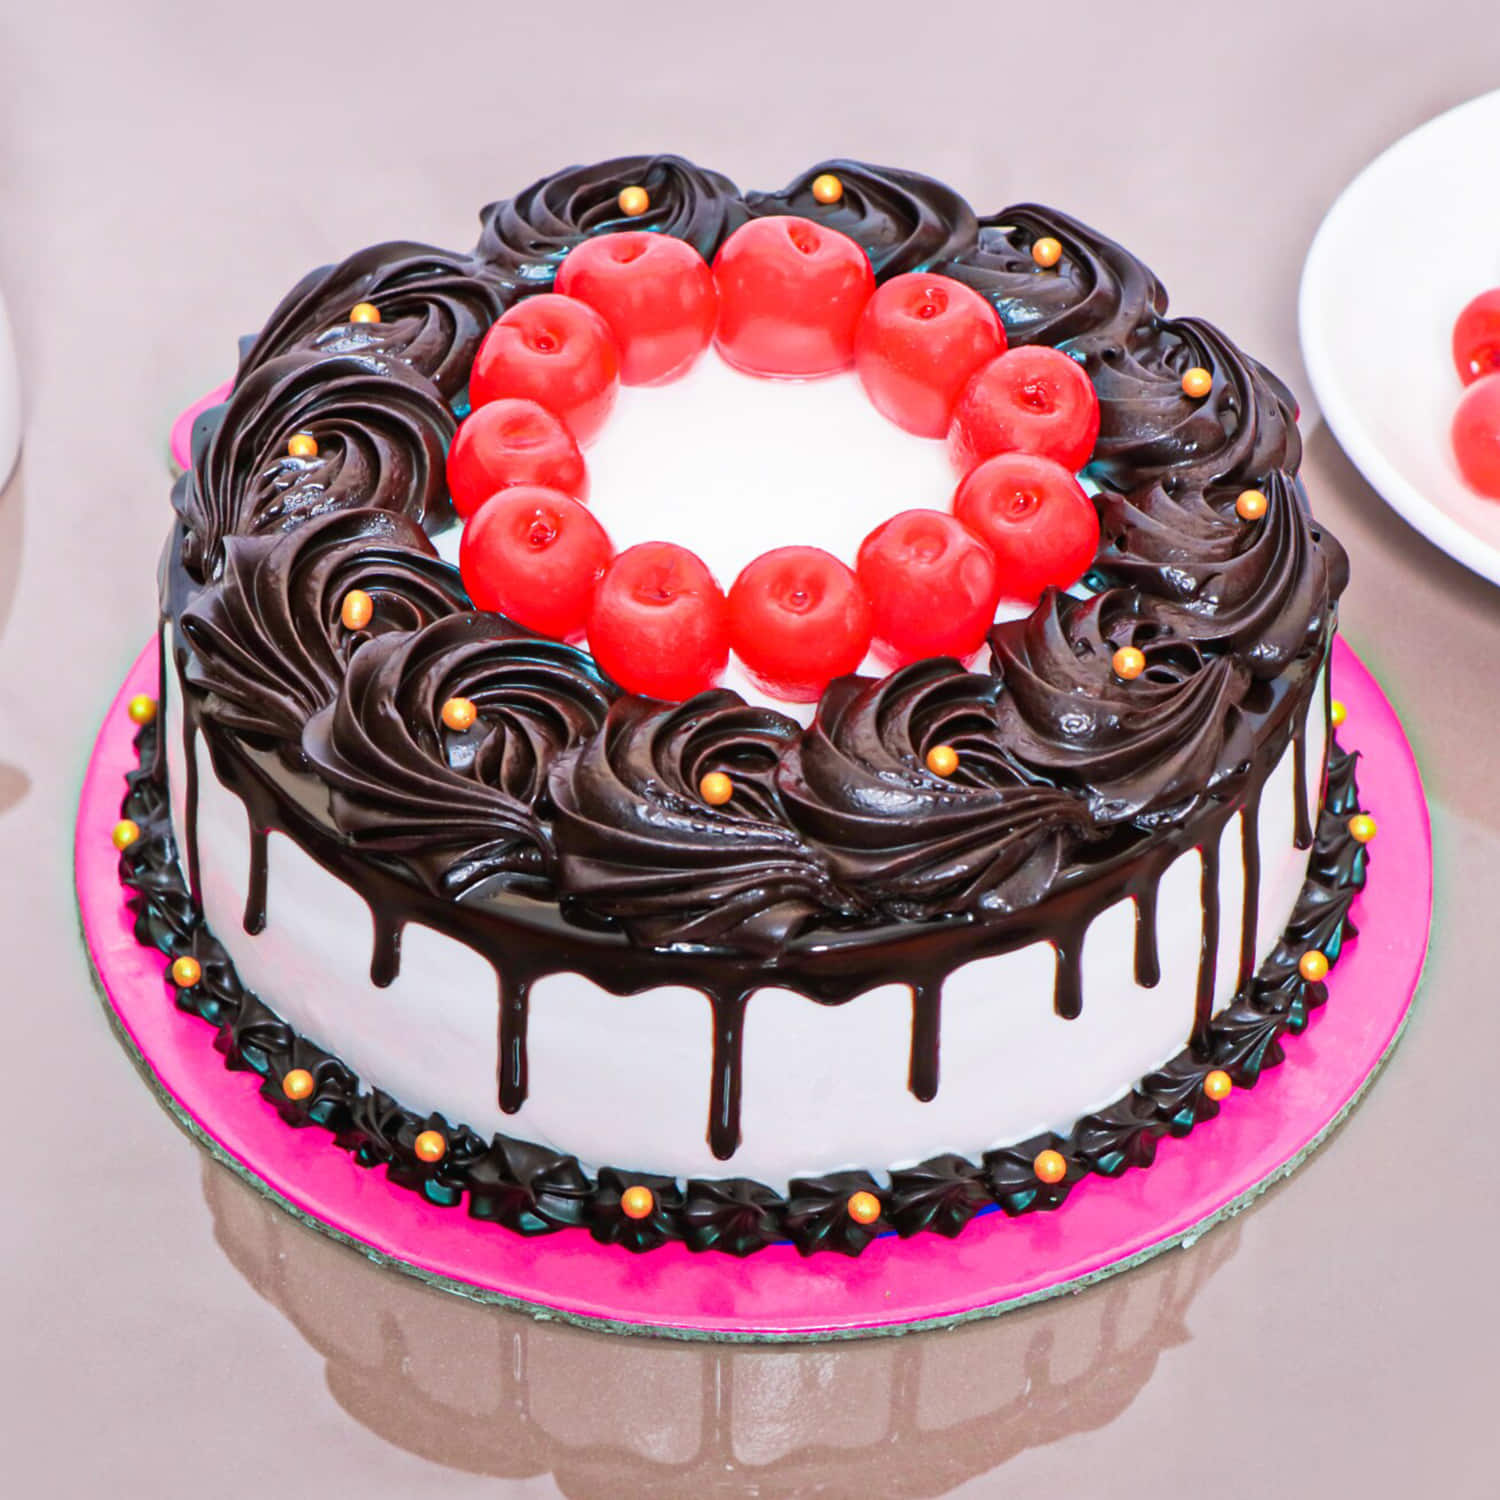 Order/Send Birthday Cake For Girlfriend Online